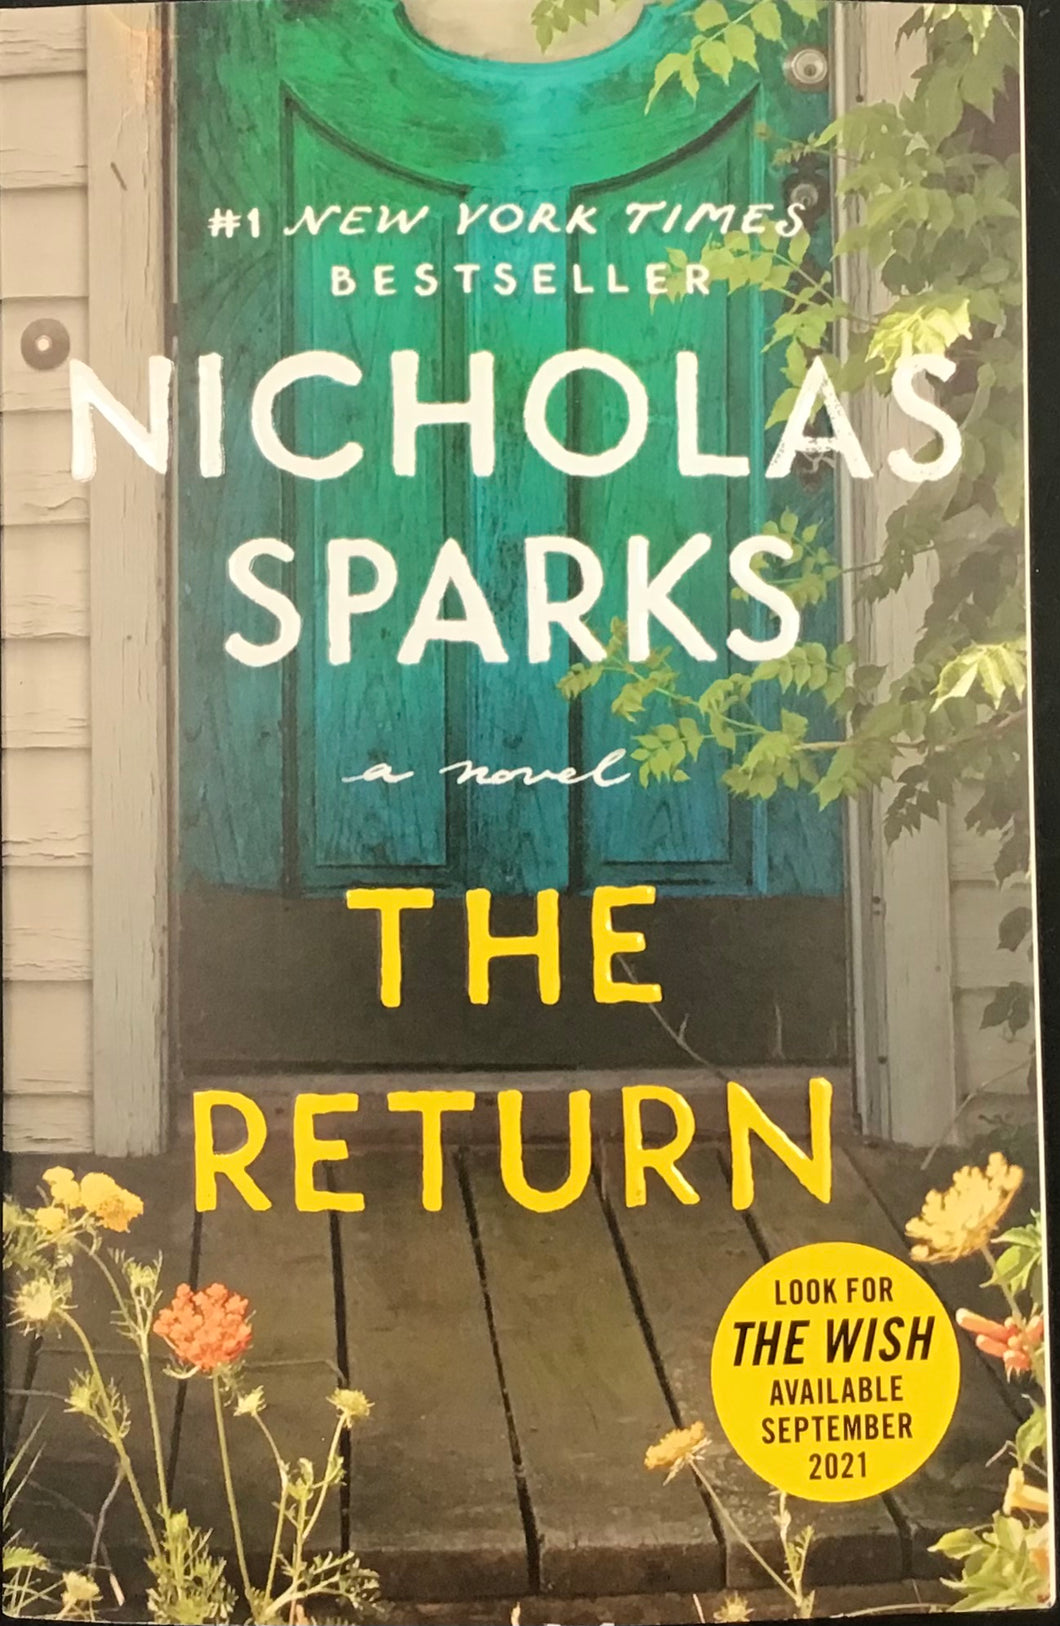 The Return, Nicholas Sparks